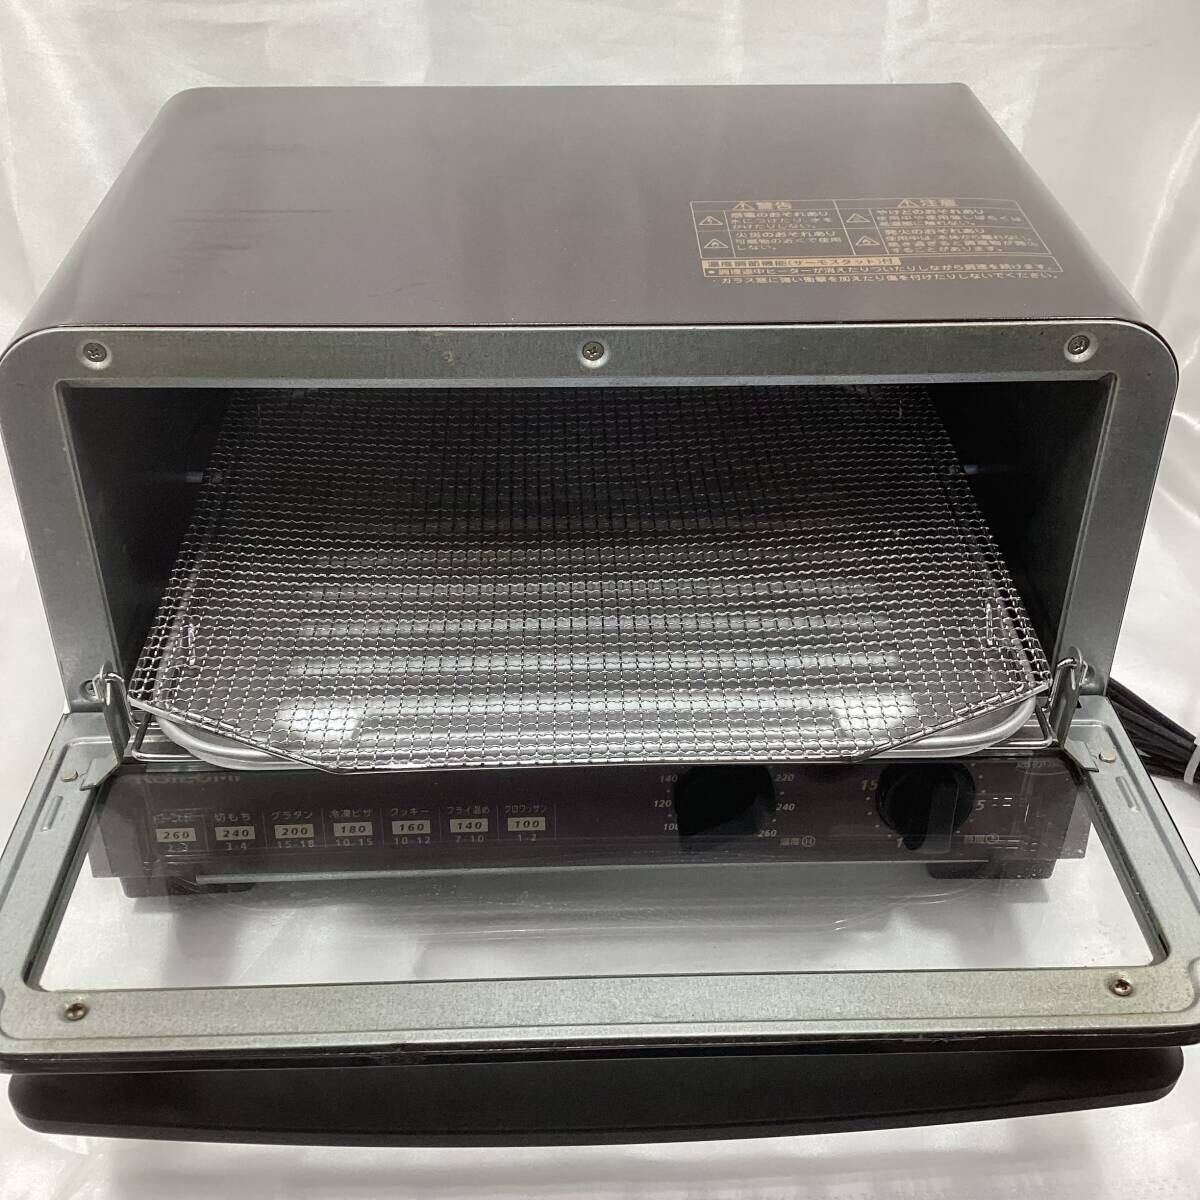  Koizumi oven toaster KOS-1215 2019 year made operation verification ending AC100V 1200W 50/60Hz KOIZUMI small Izumi . vessel corporation (E1264)